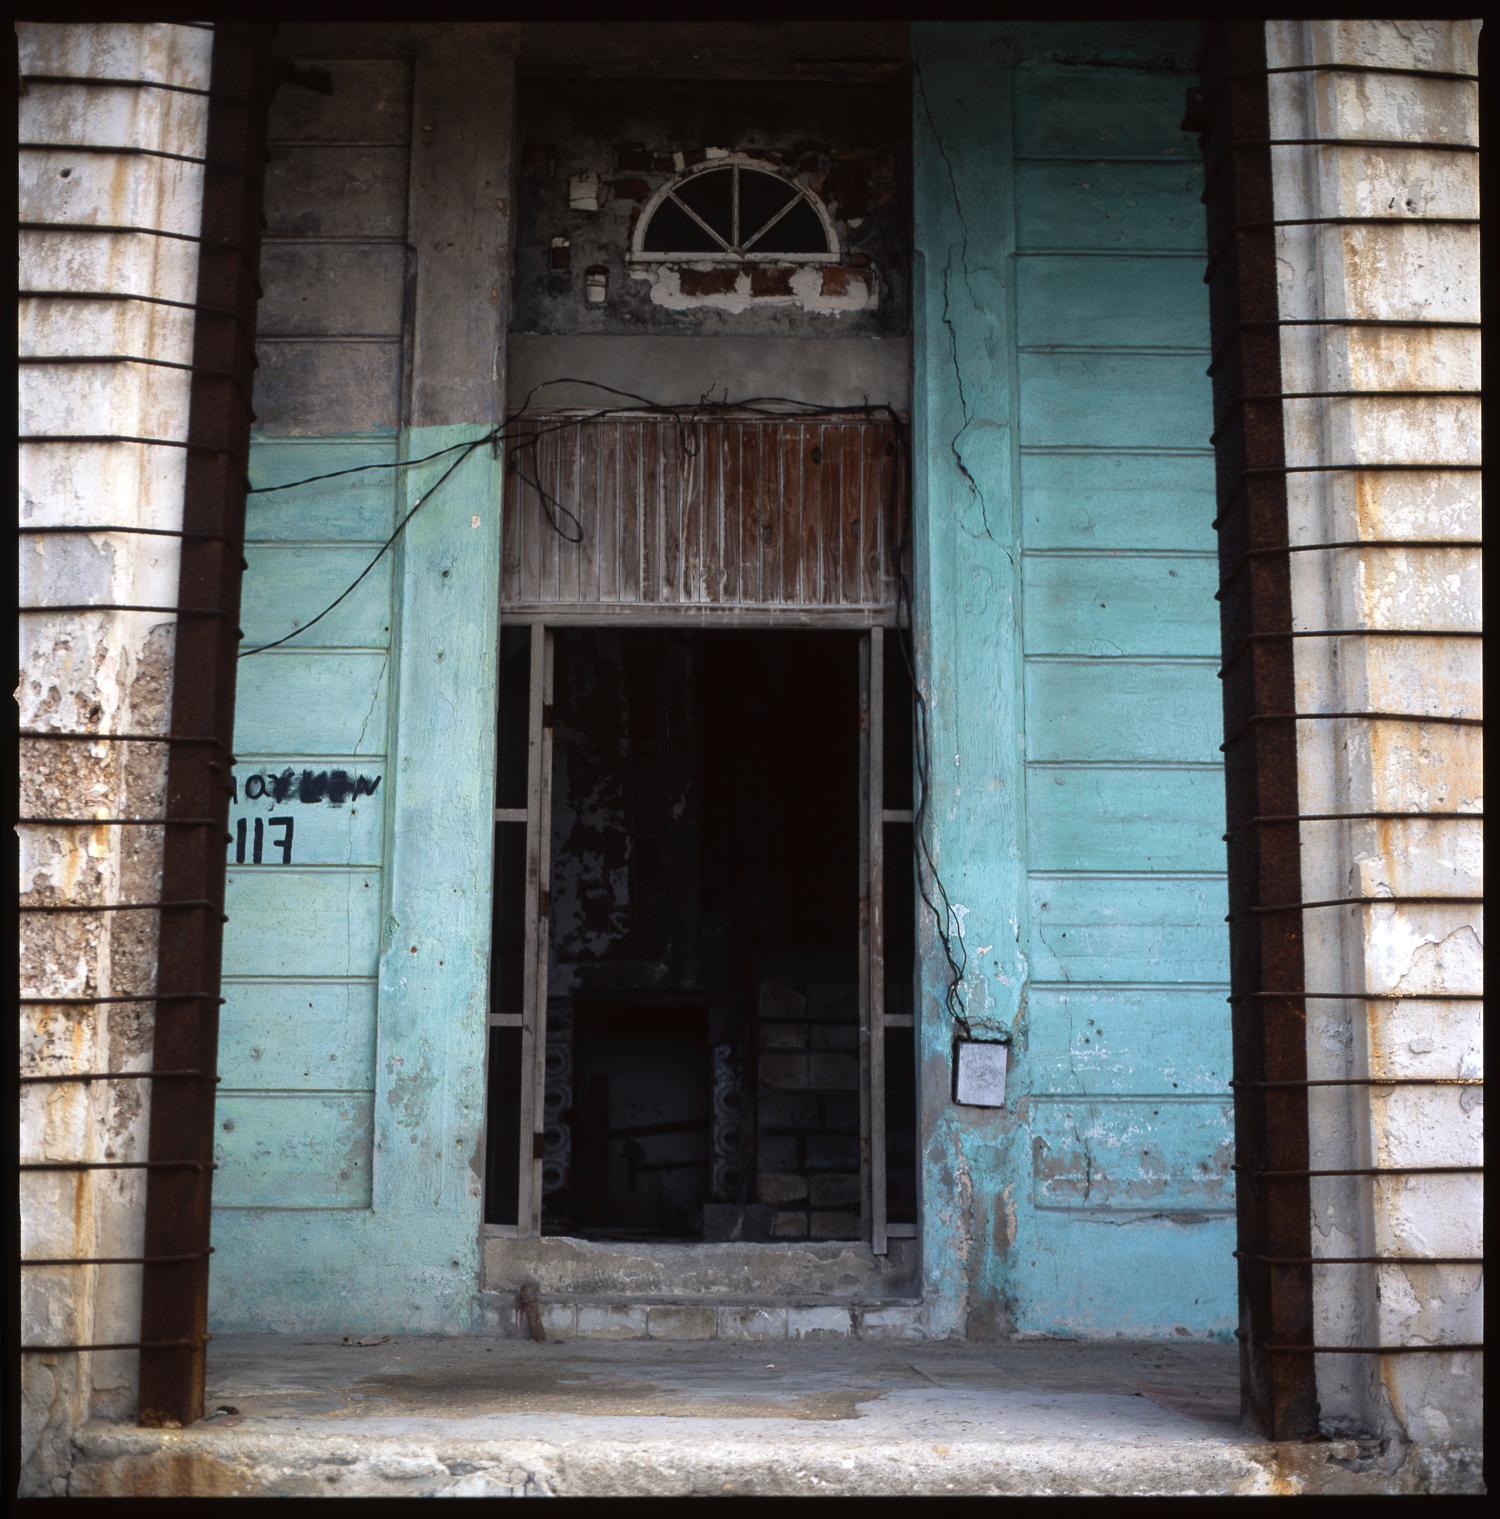 Paul Cooklin Landscape Photograph - Edition 1/10 - 117 Malecon, Havana, Cuba, C-Type Photograph